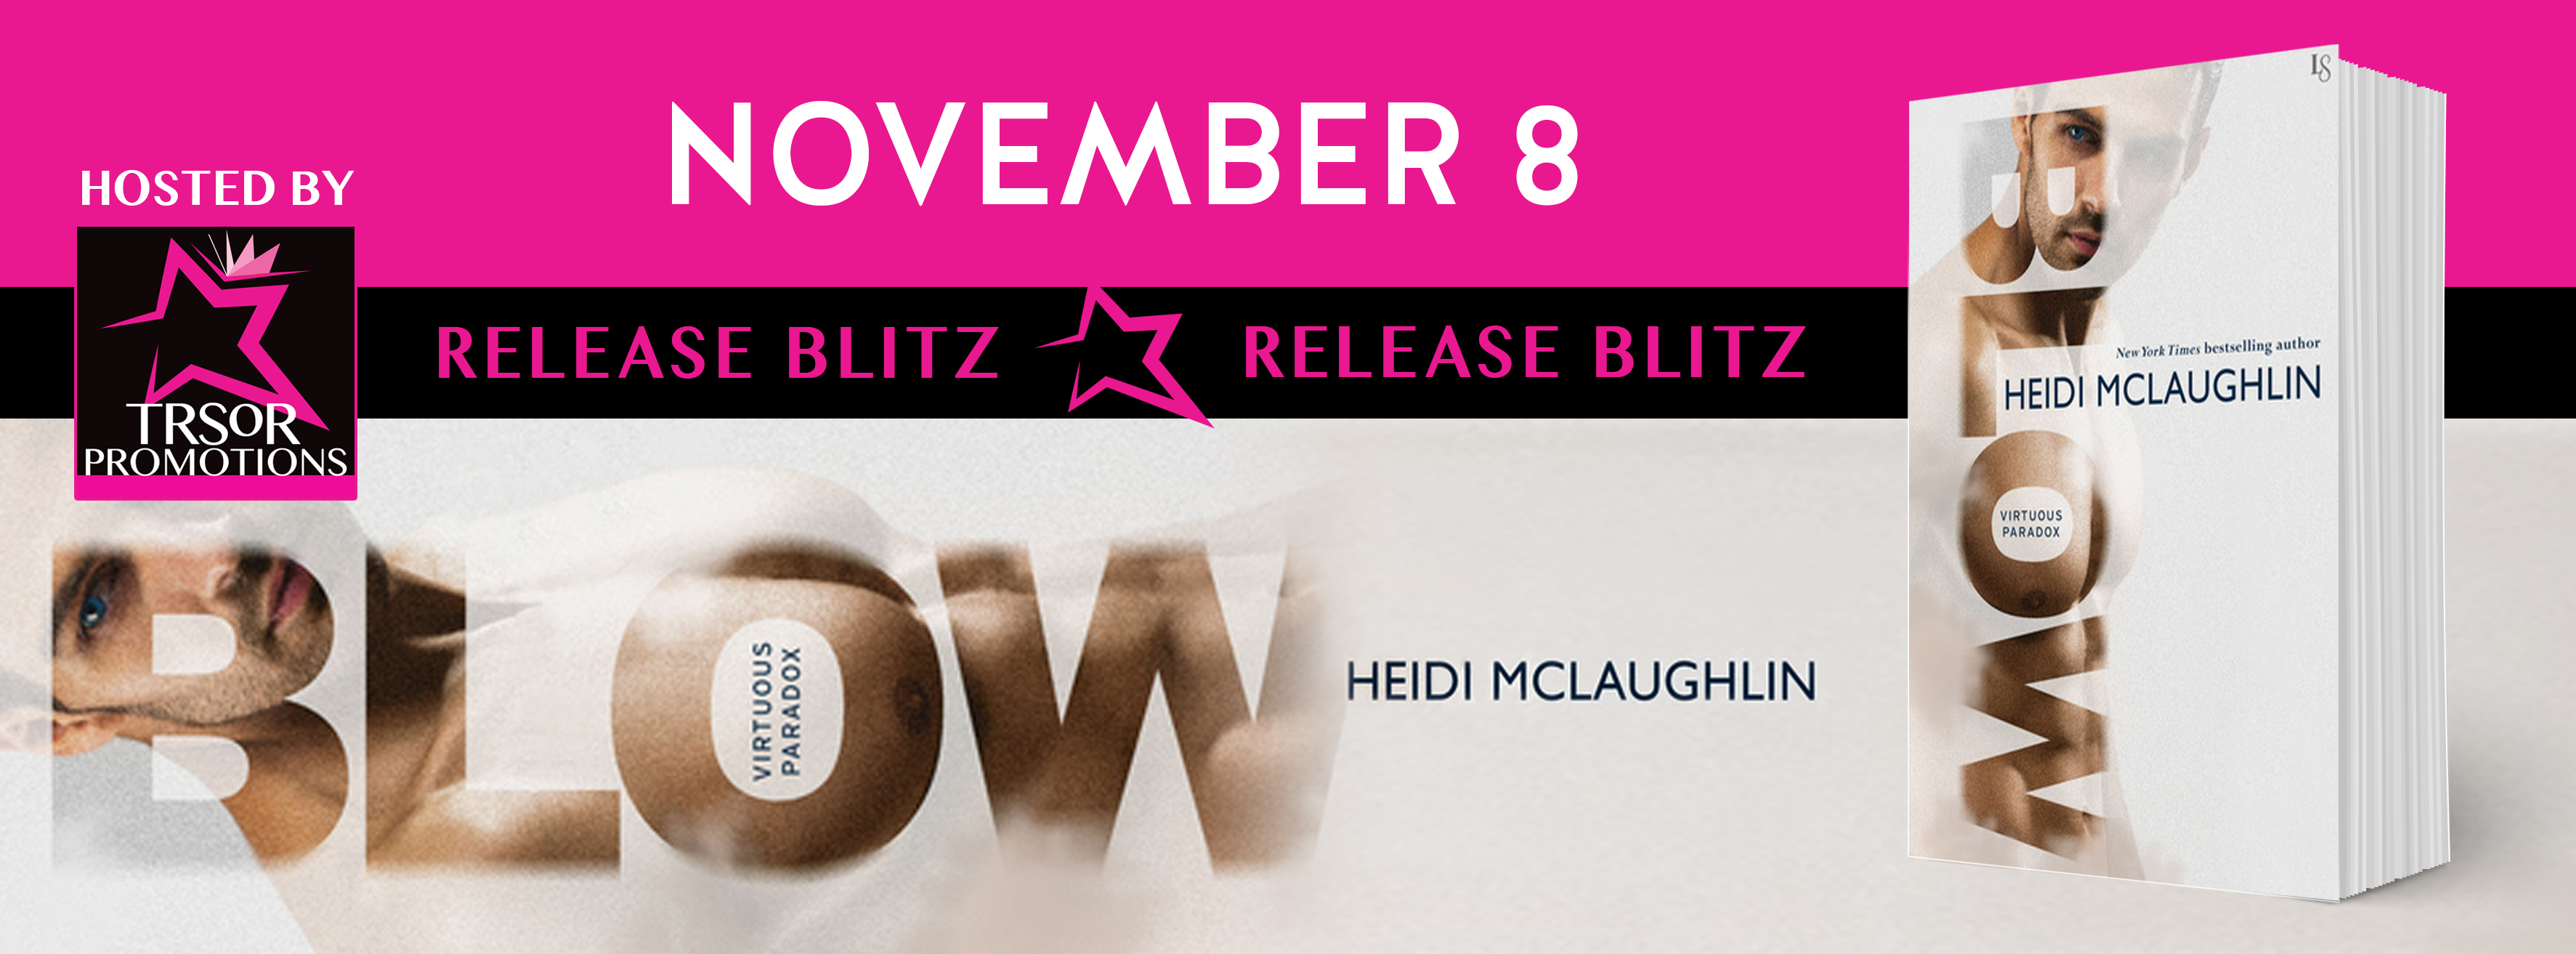 blow_release_blitz-1